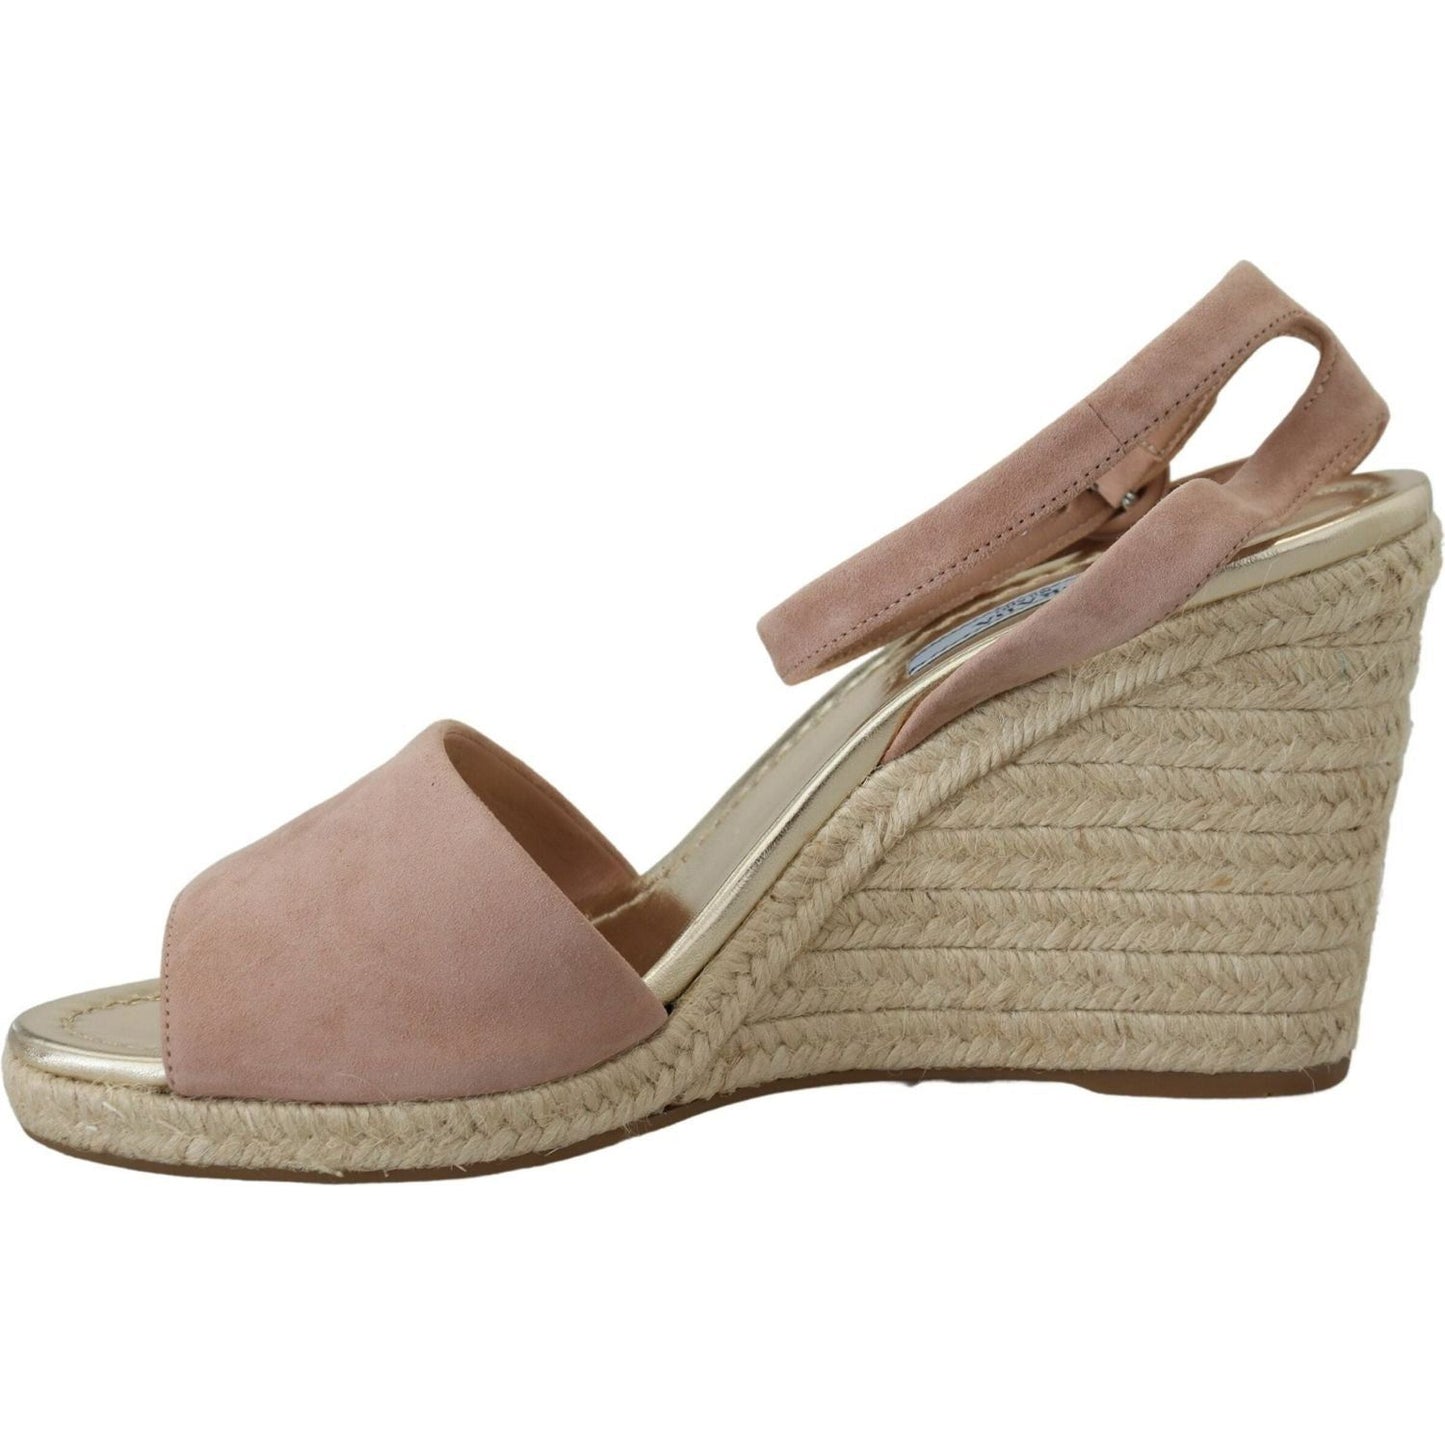 Prada Elegant Suede Ankle Strap Wedge Sandals pink-suede-leather-ankle-strap-sandals IMG_8319-1-scaled-47b6ccda-f79.jpg